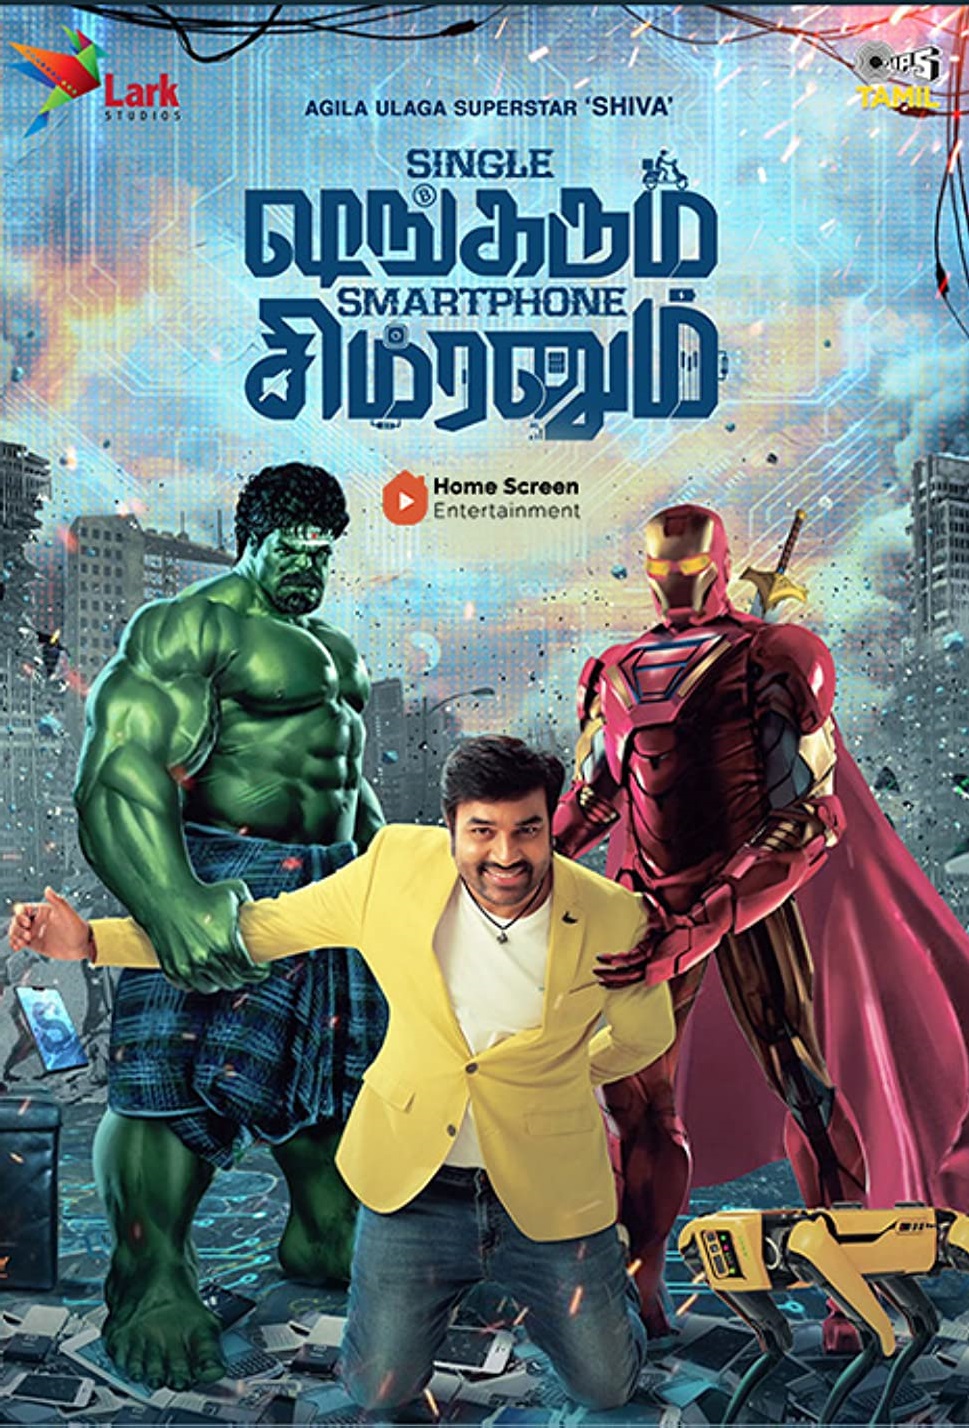 Single Shankarum Smartphone Simranum 2023 Tamil Drama Movie Online